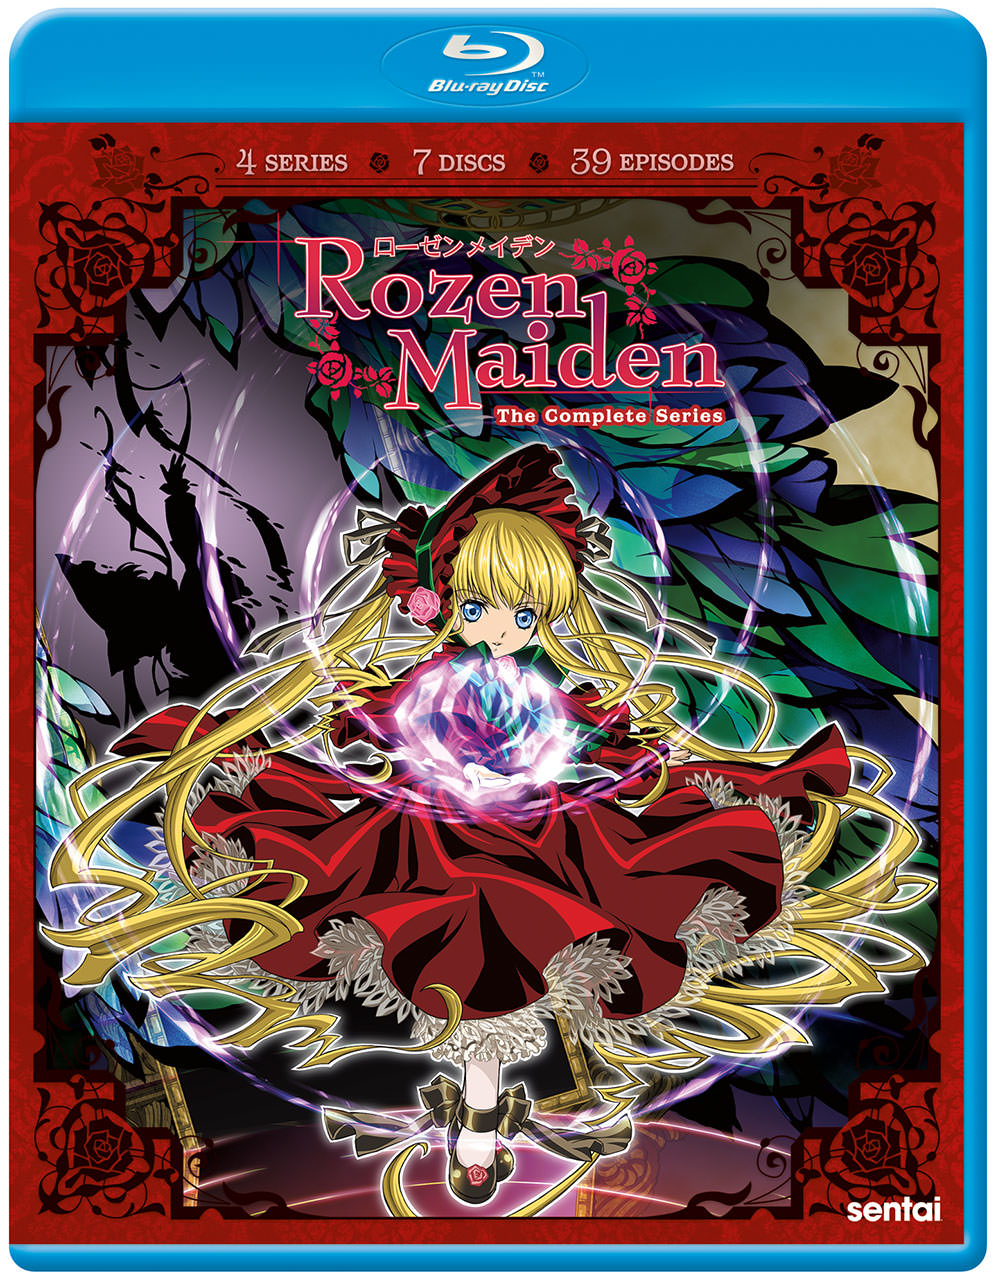 'Rozen Maiden' Blu-ray Cover Art provided by Sentai Filmworks